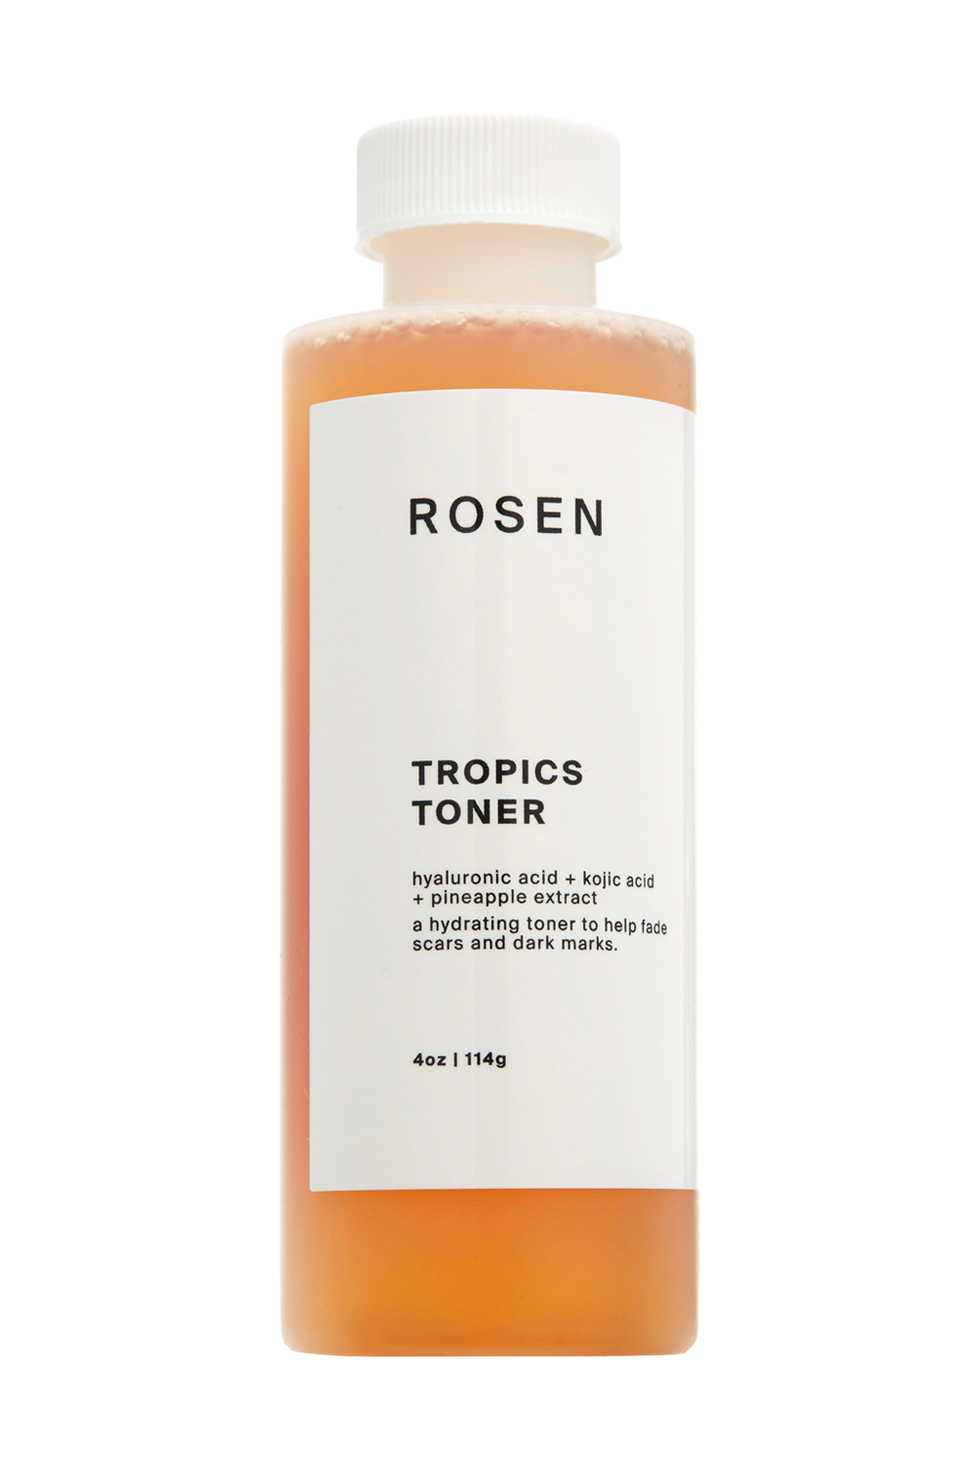 Rosen Tropics Toner